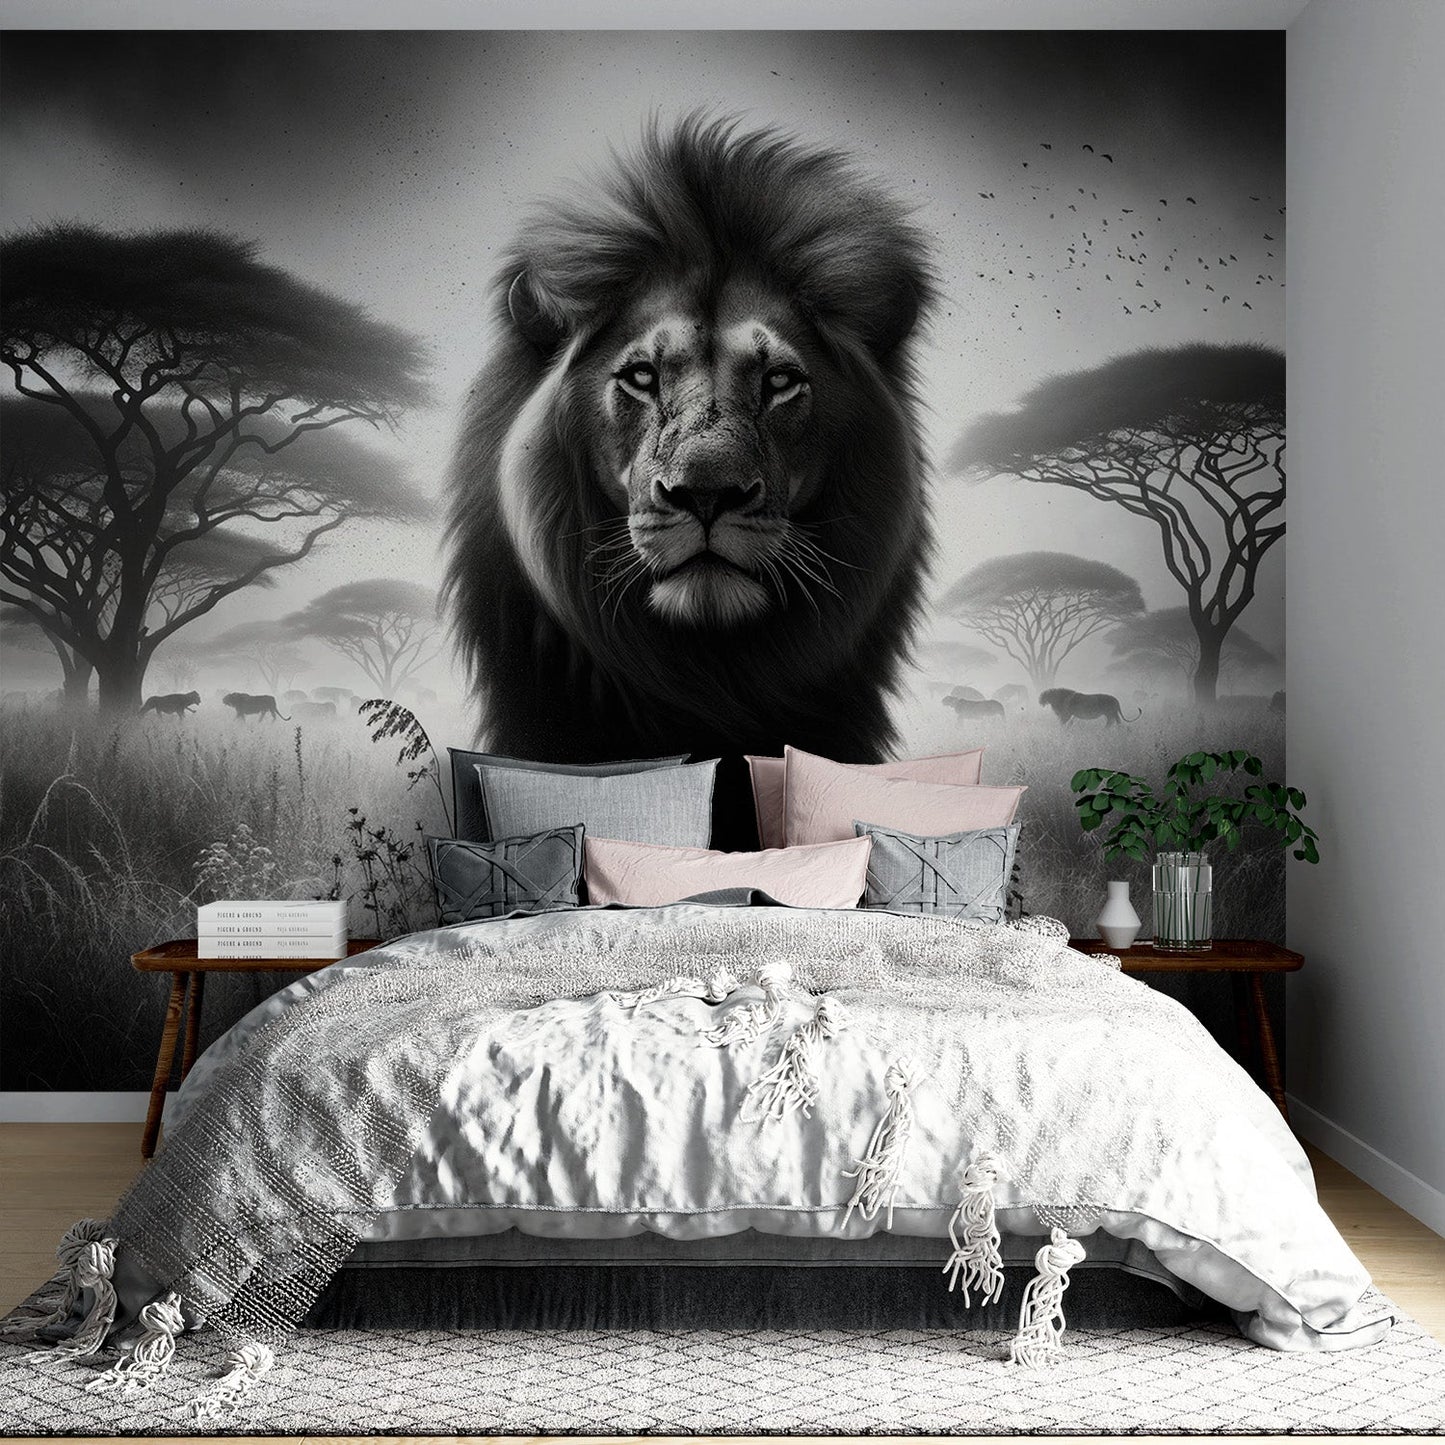 Black and white lion wallpaper | Facing forward in the savannah